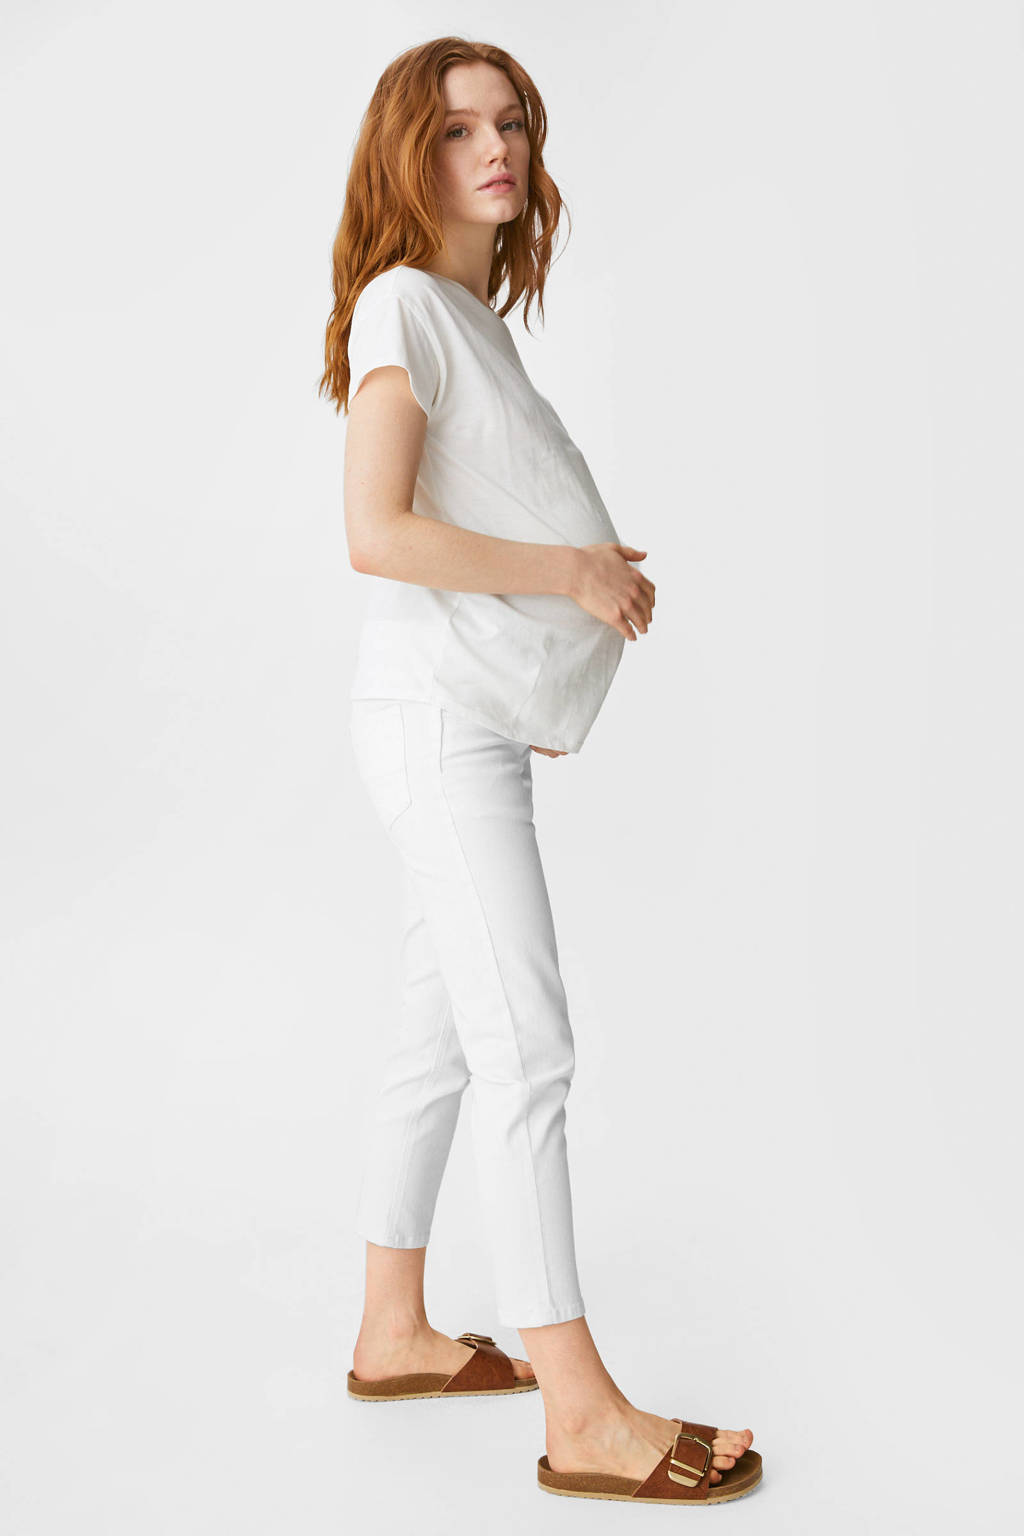 Zich voorstellen raket Populair C&A The Denim cropped straight fit zwangerschapsbroek wit | wehkamp